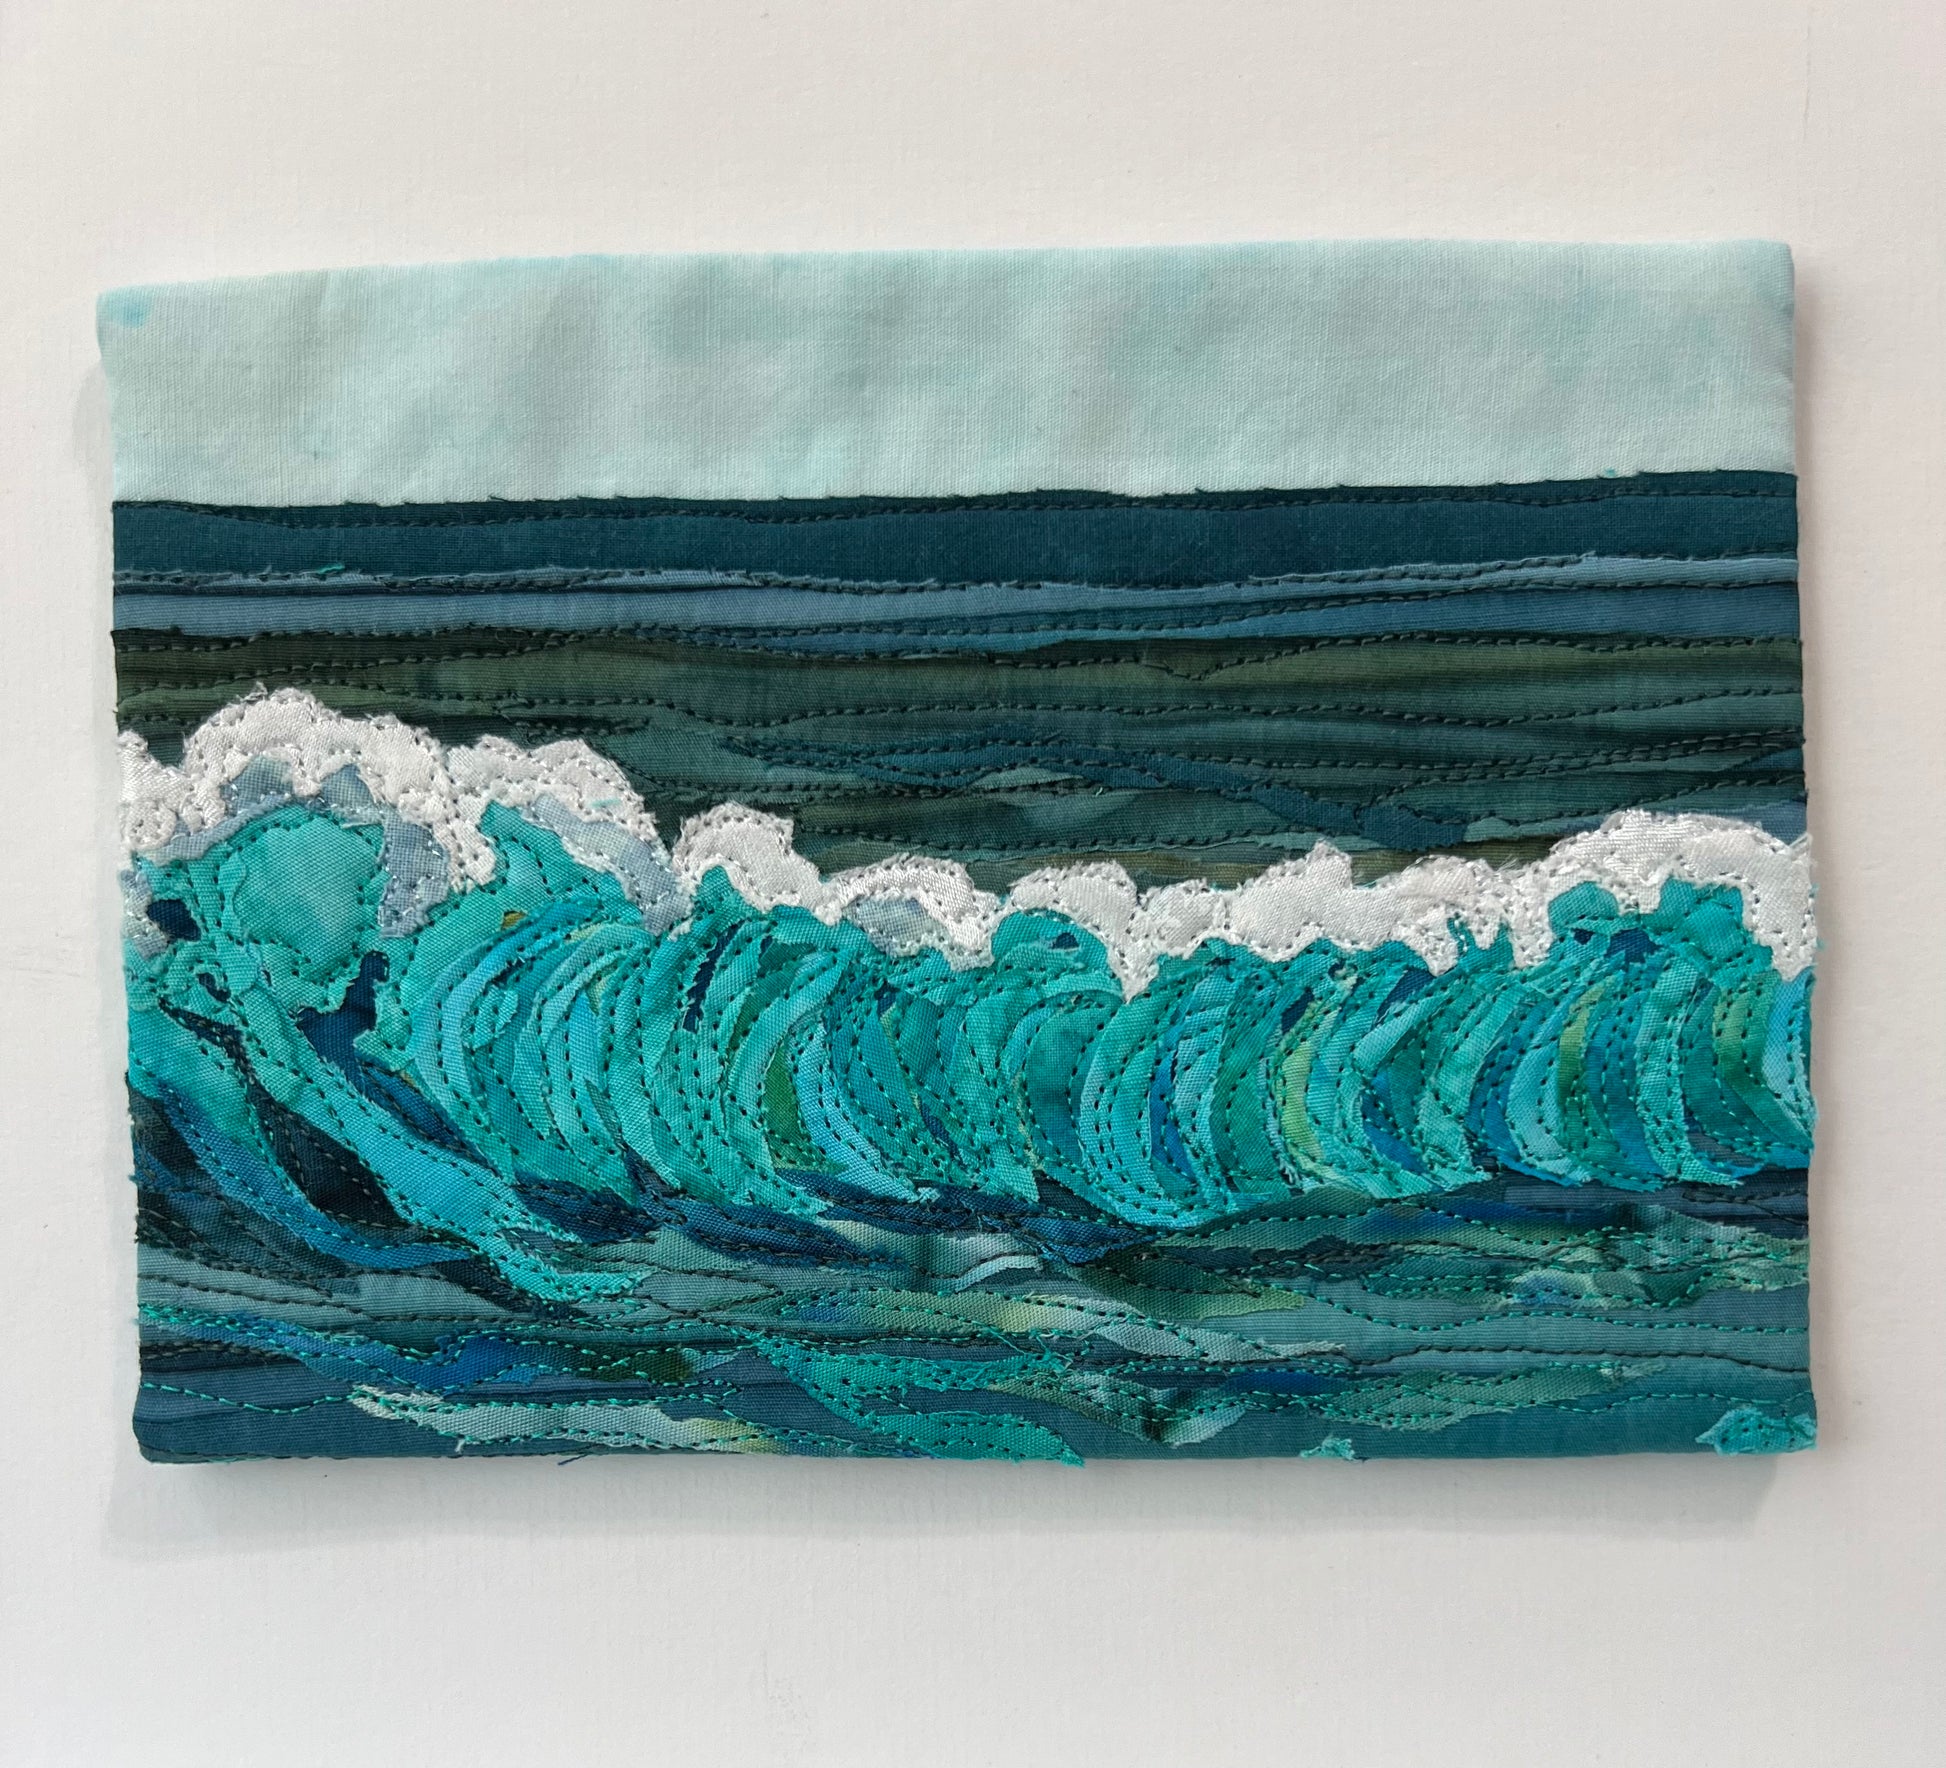 Mini wave, ocean art, textile art seascape, small fiber art seascape, 5”x7” fabric collage